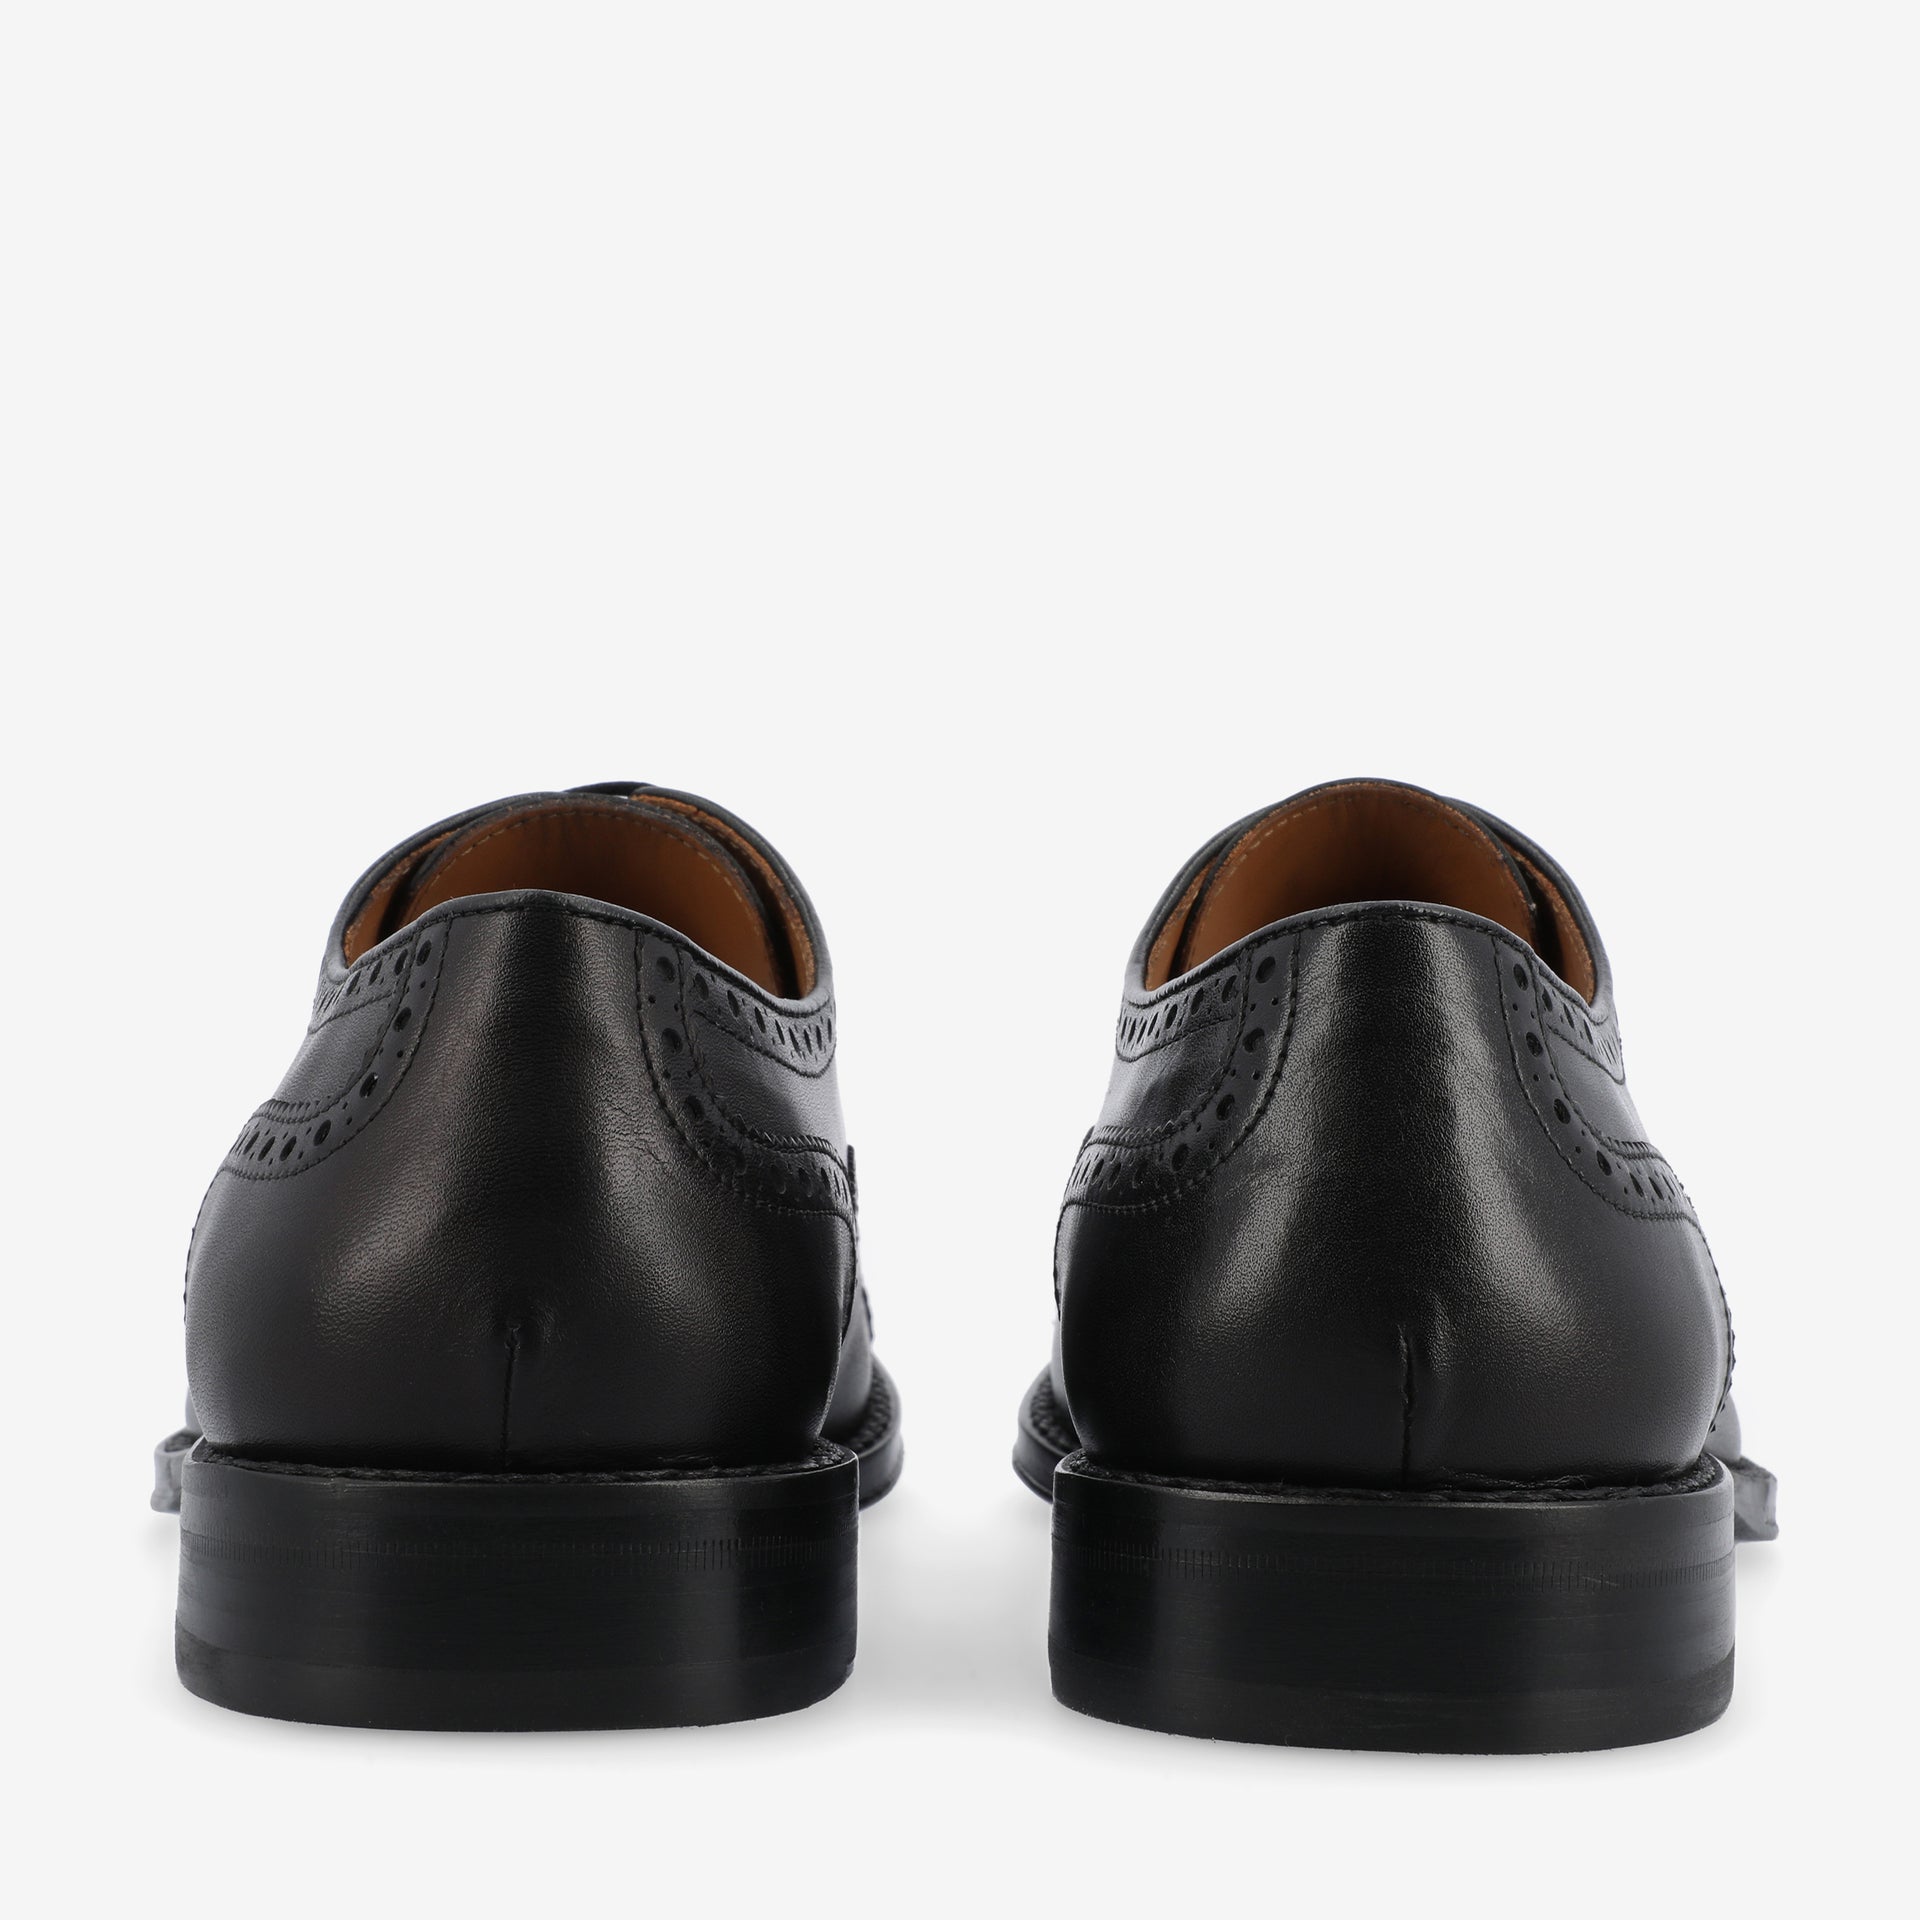 The Noah Shoe - Black Dress Shoes | TAFT